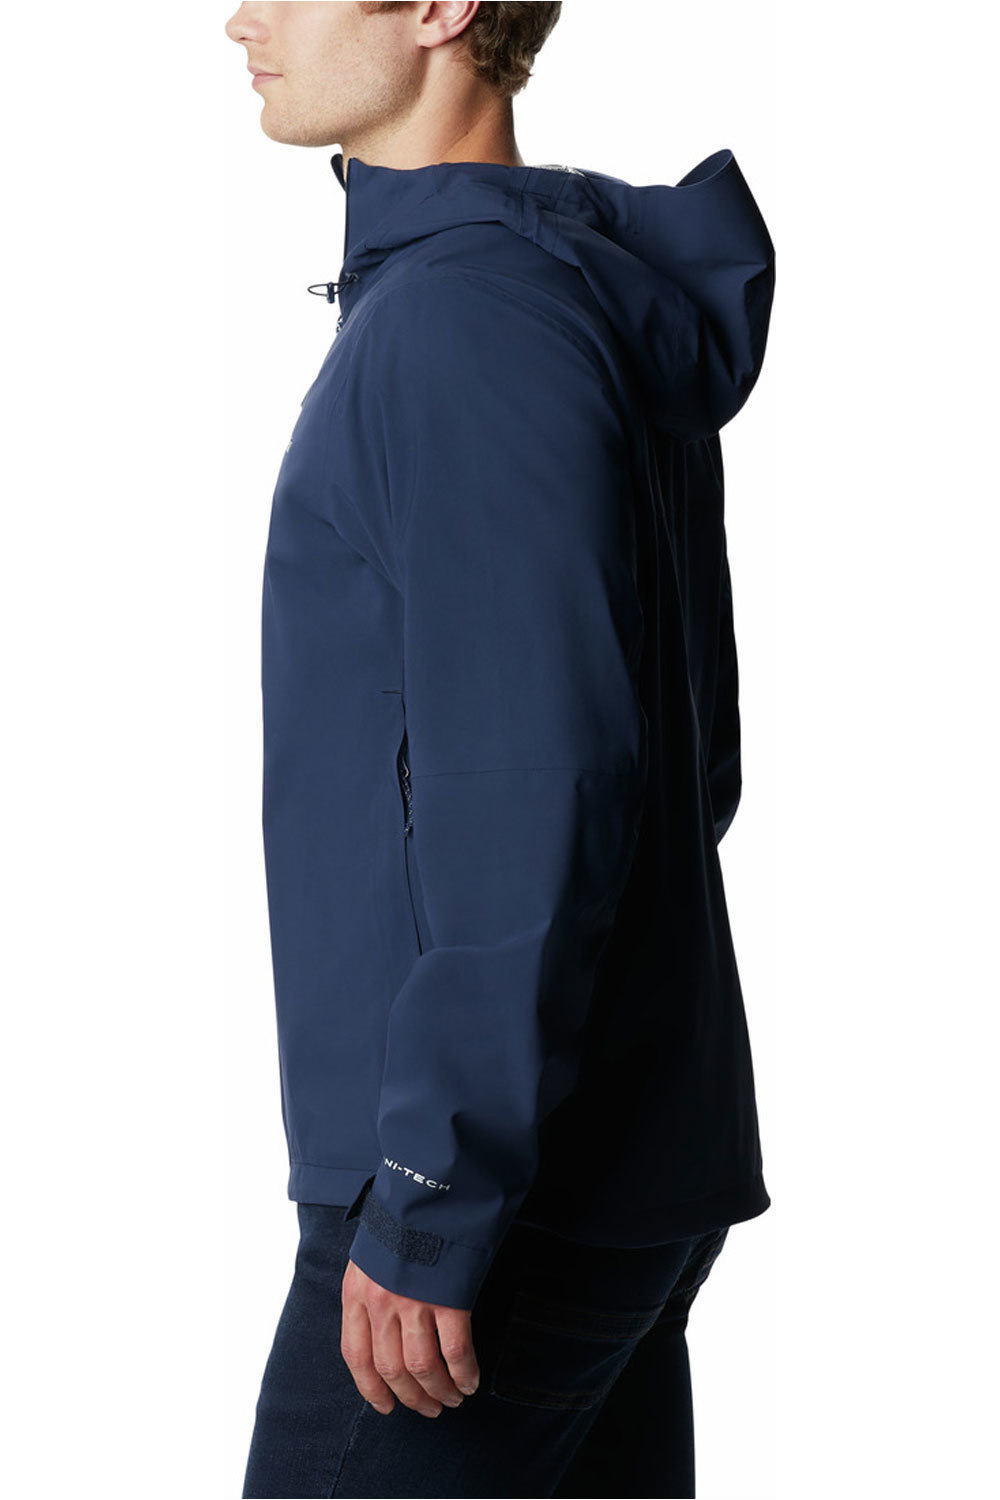 Columbia chaqueta impermeable hombre Omni-Tech� Ampli-Dry� Shell vista detalle